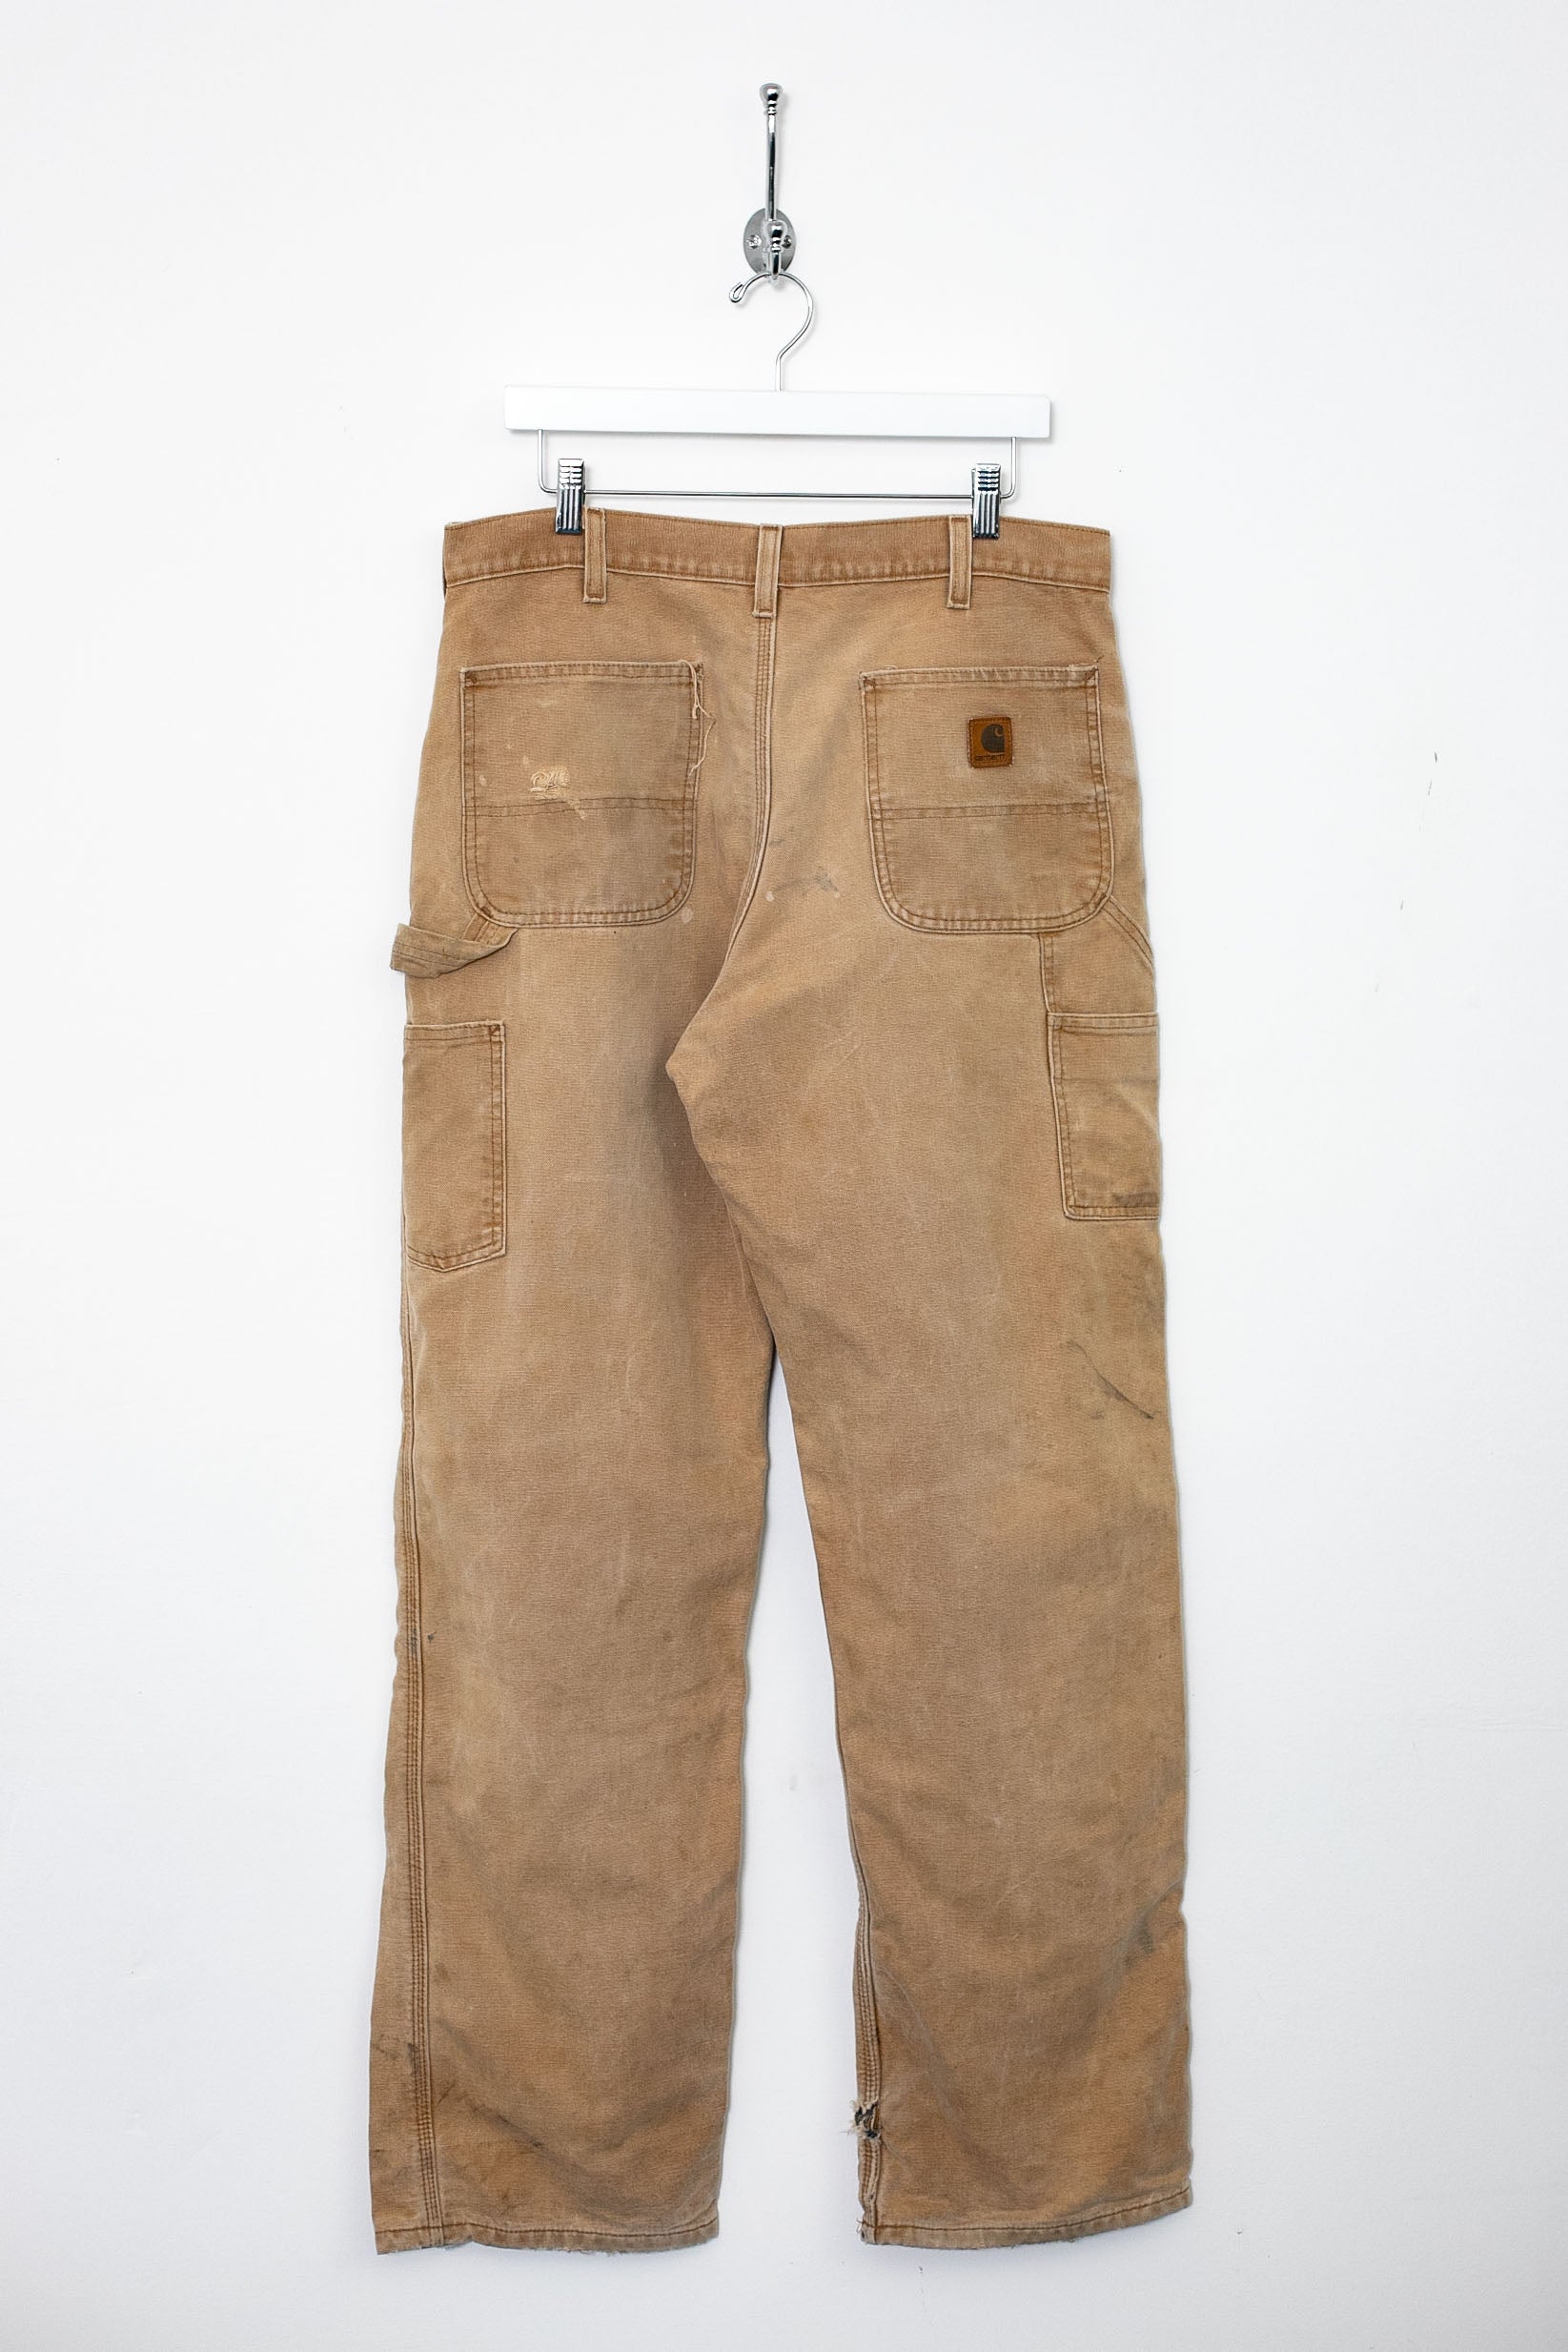 Carhartt Carpenter pants